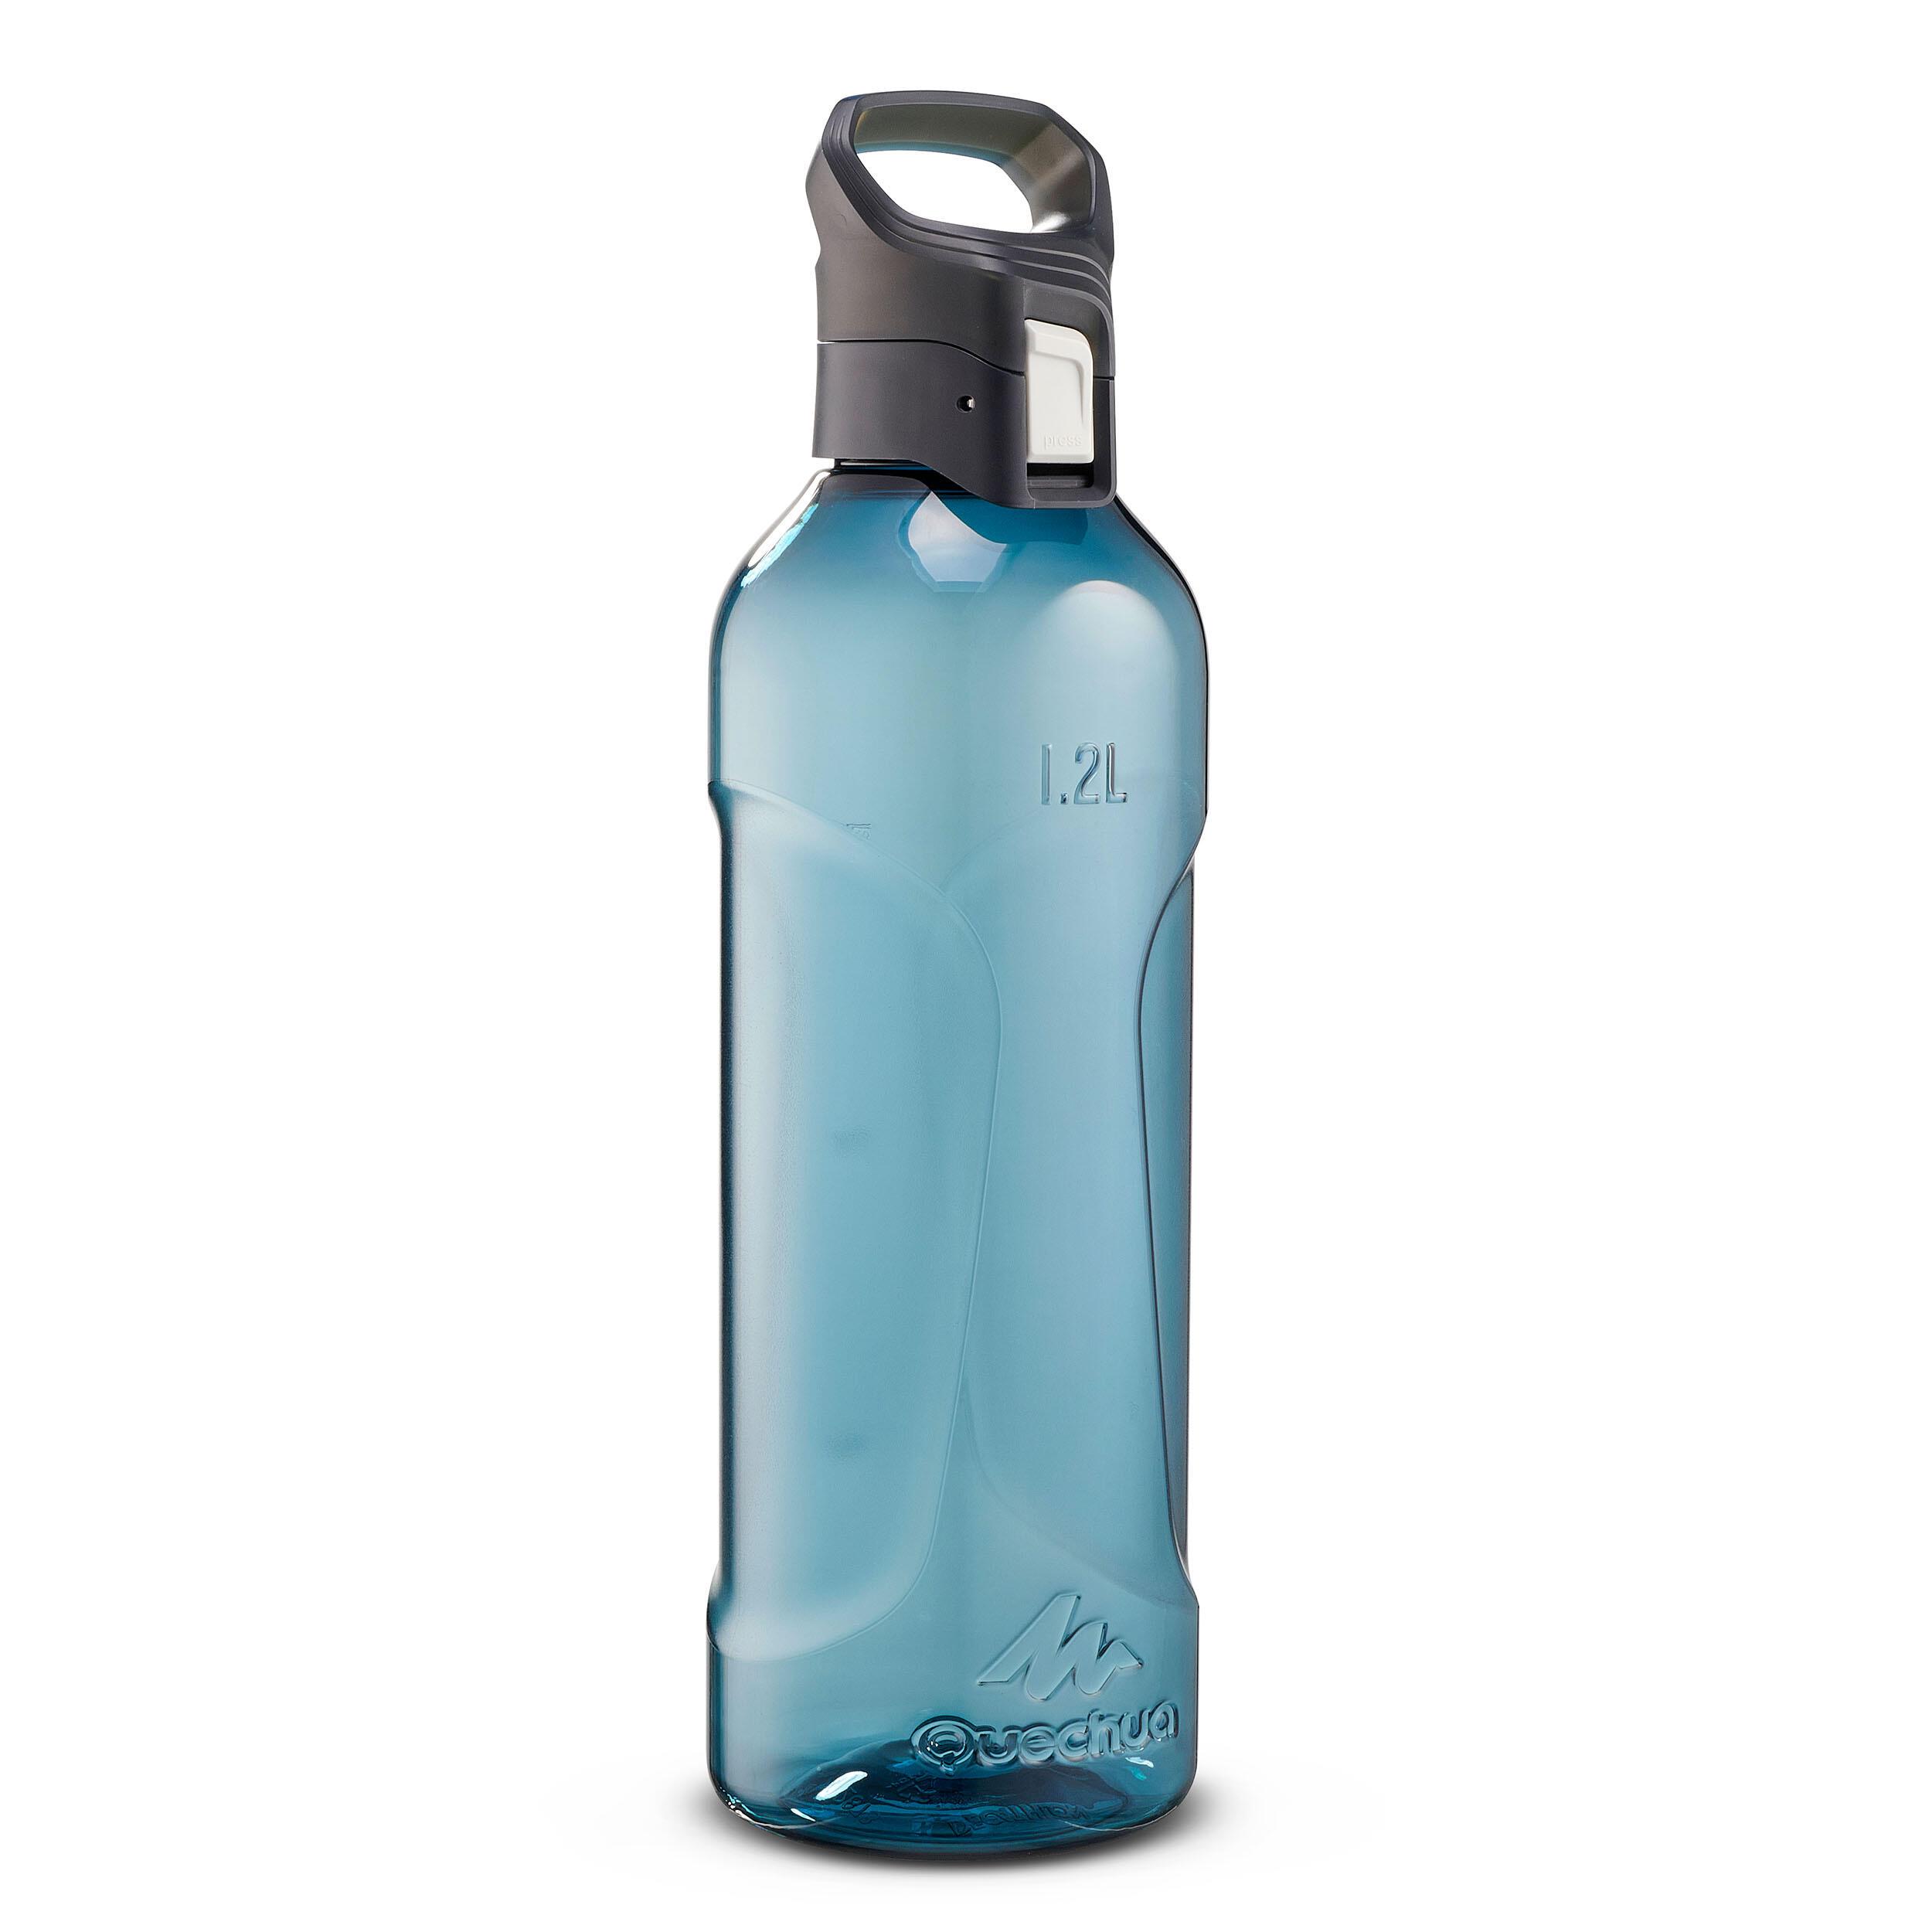 Decathlon Plastic (Tritan) Hiking Flask With Quick Opening Cap Mh500 1.2 Litre Blue Quechua